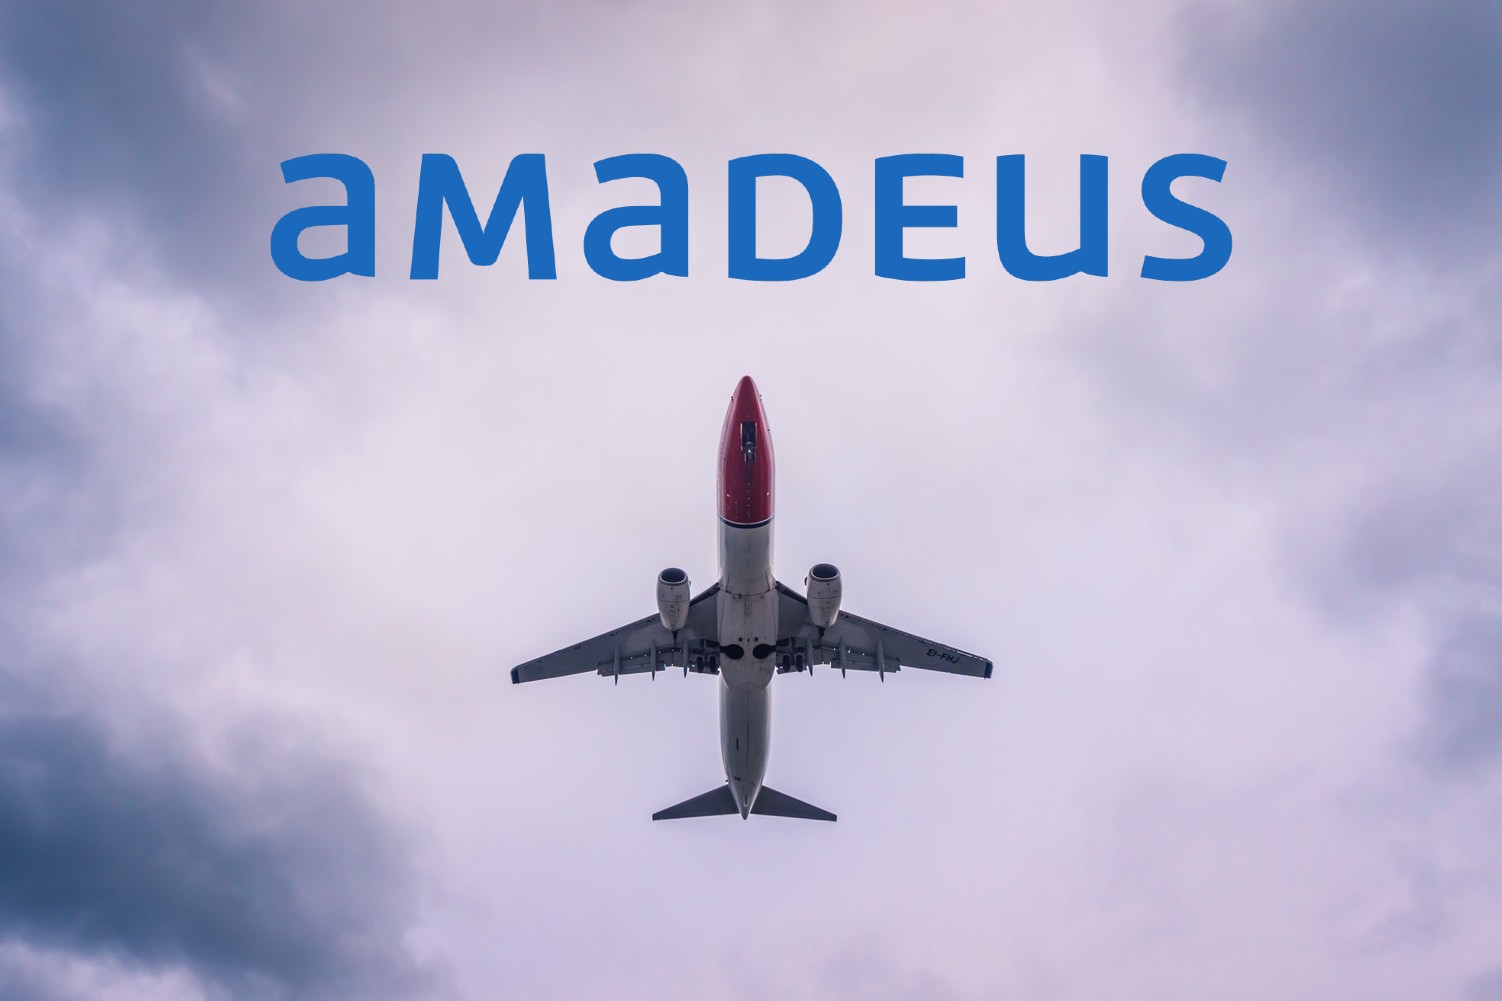 Norwegian plane in the air, Amadeus logo